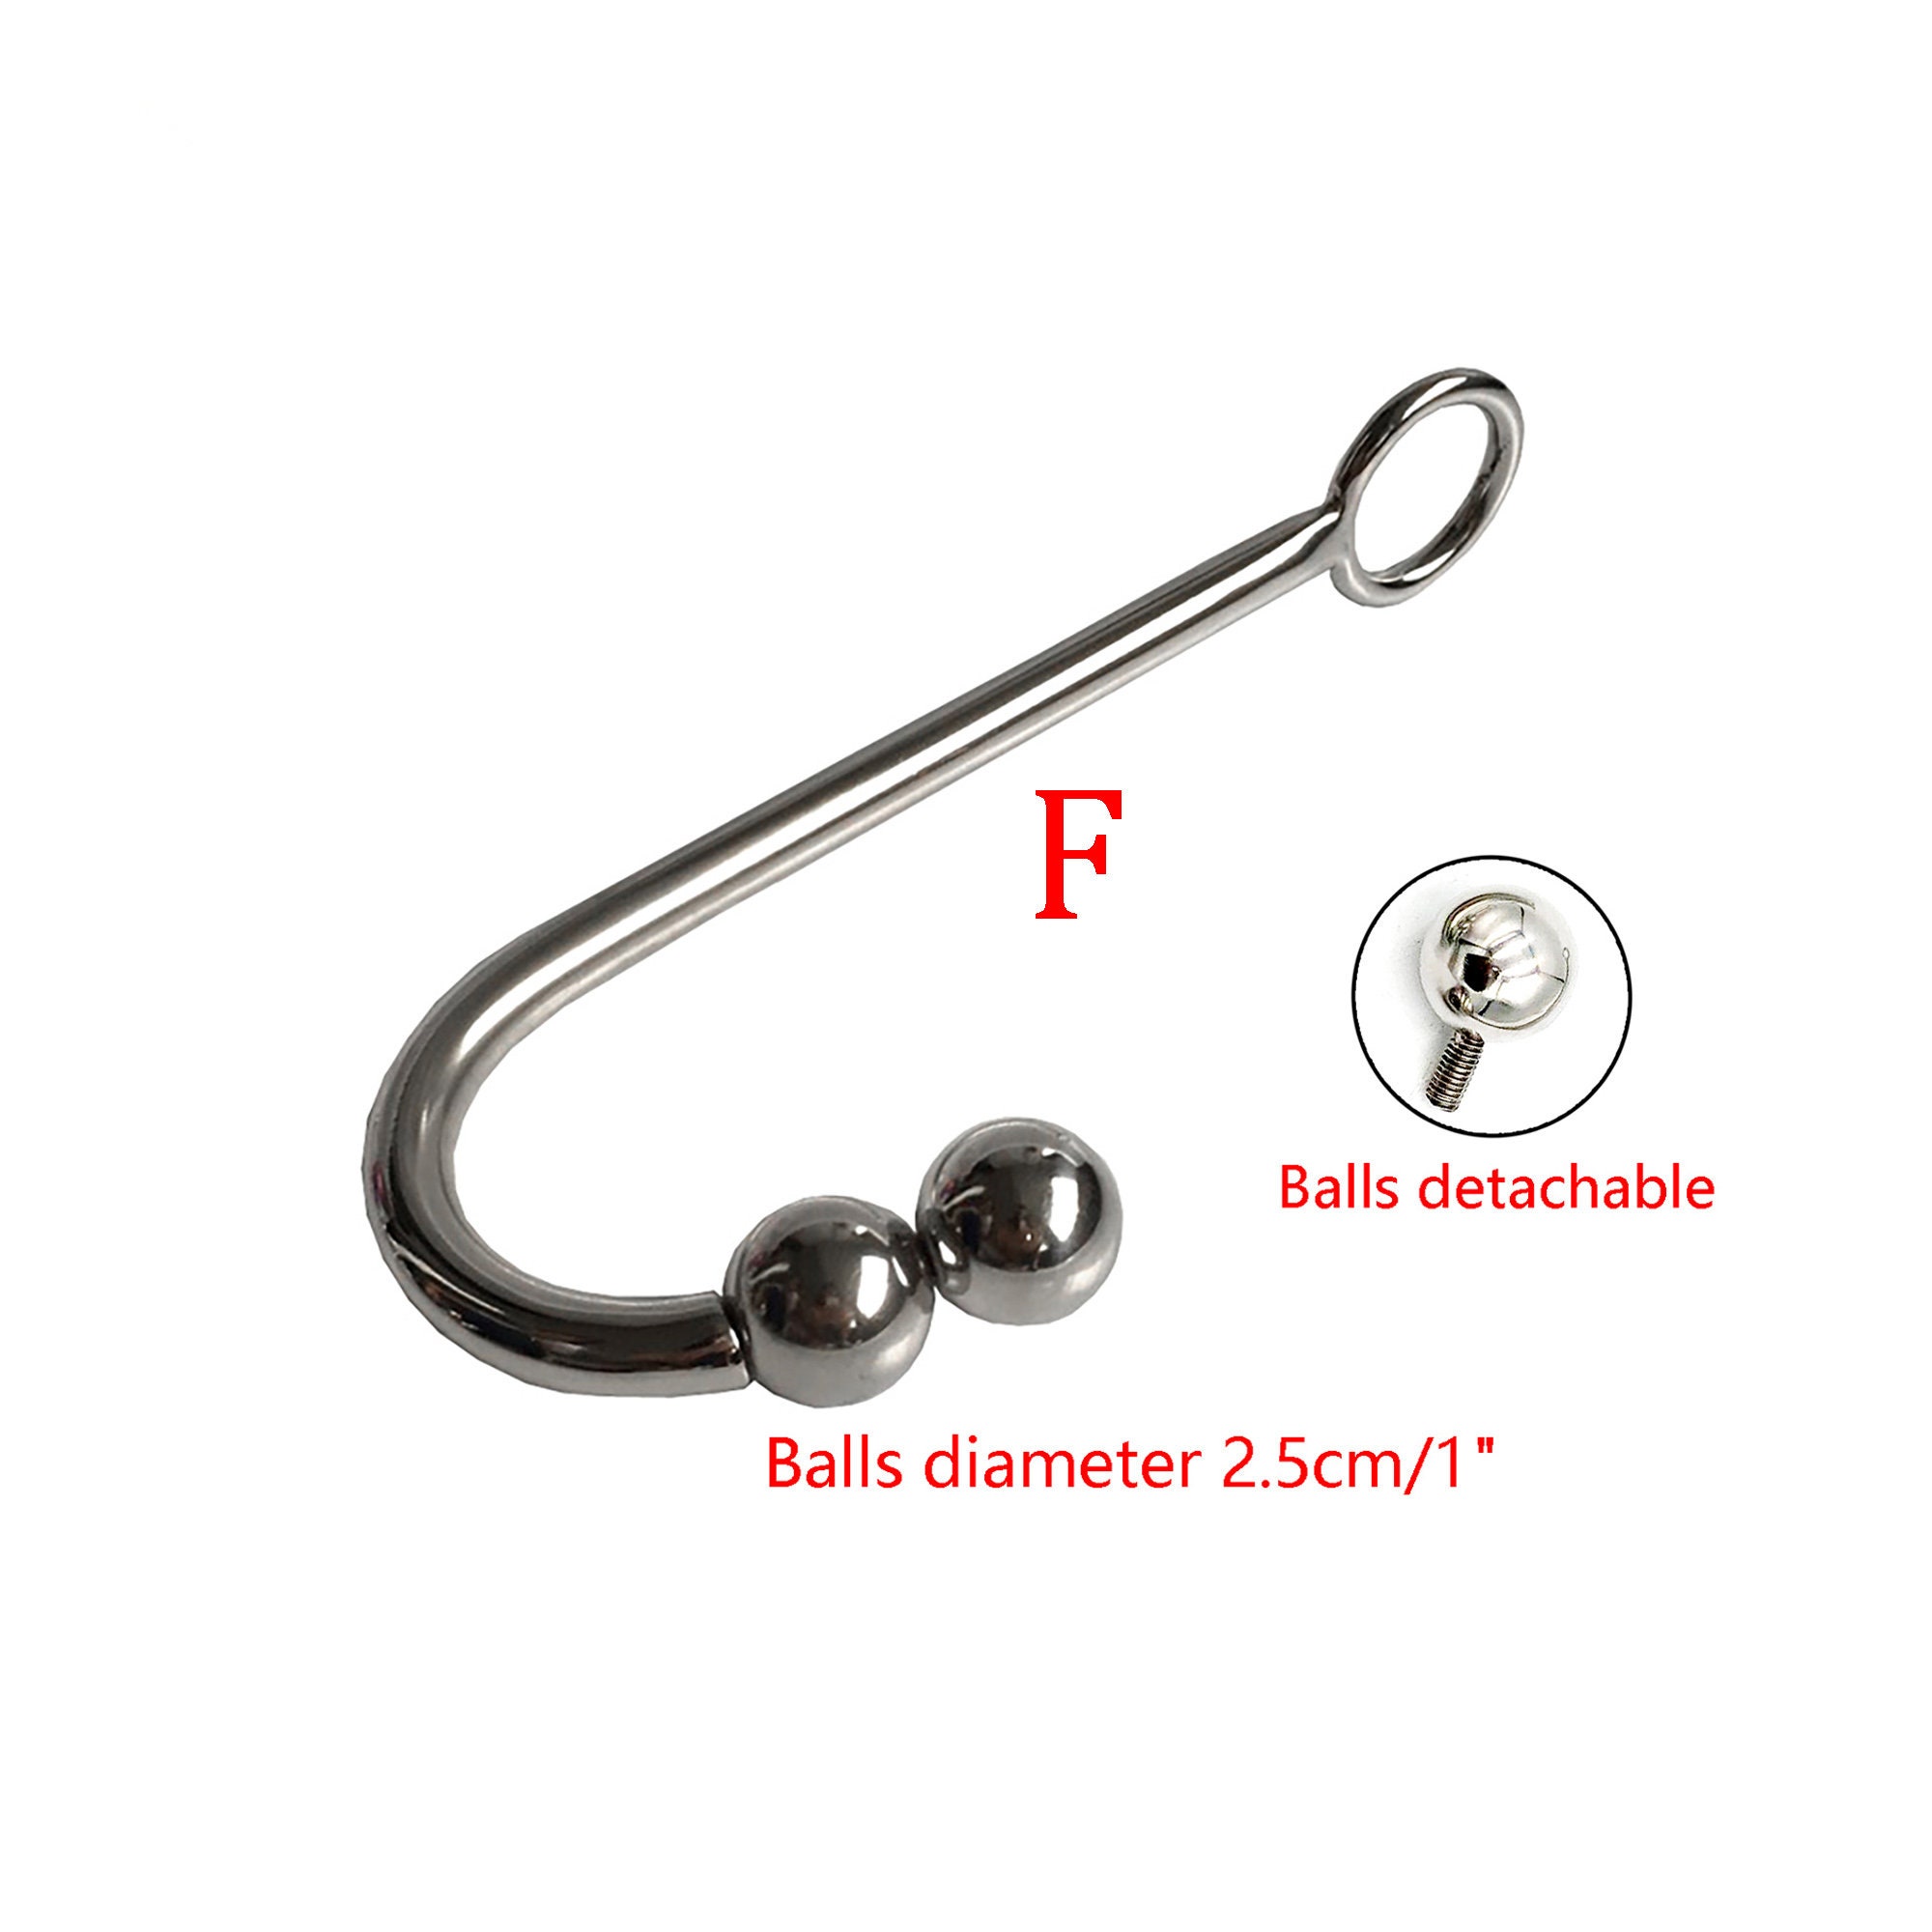 Bdsm Anal Hook And Bondage Handcuffs Customizable Sleek Steel Ball